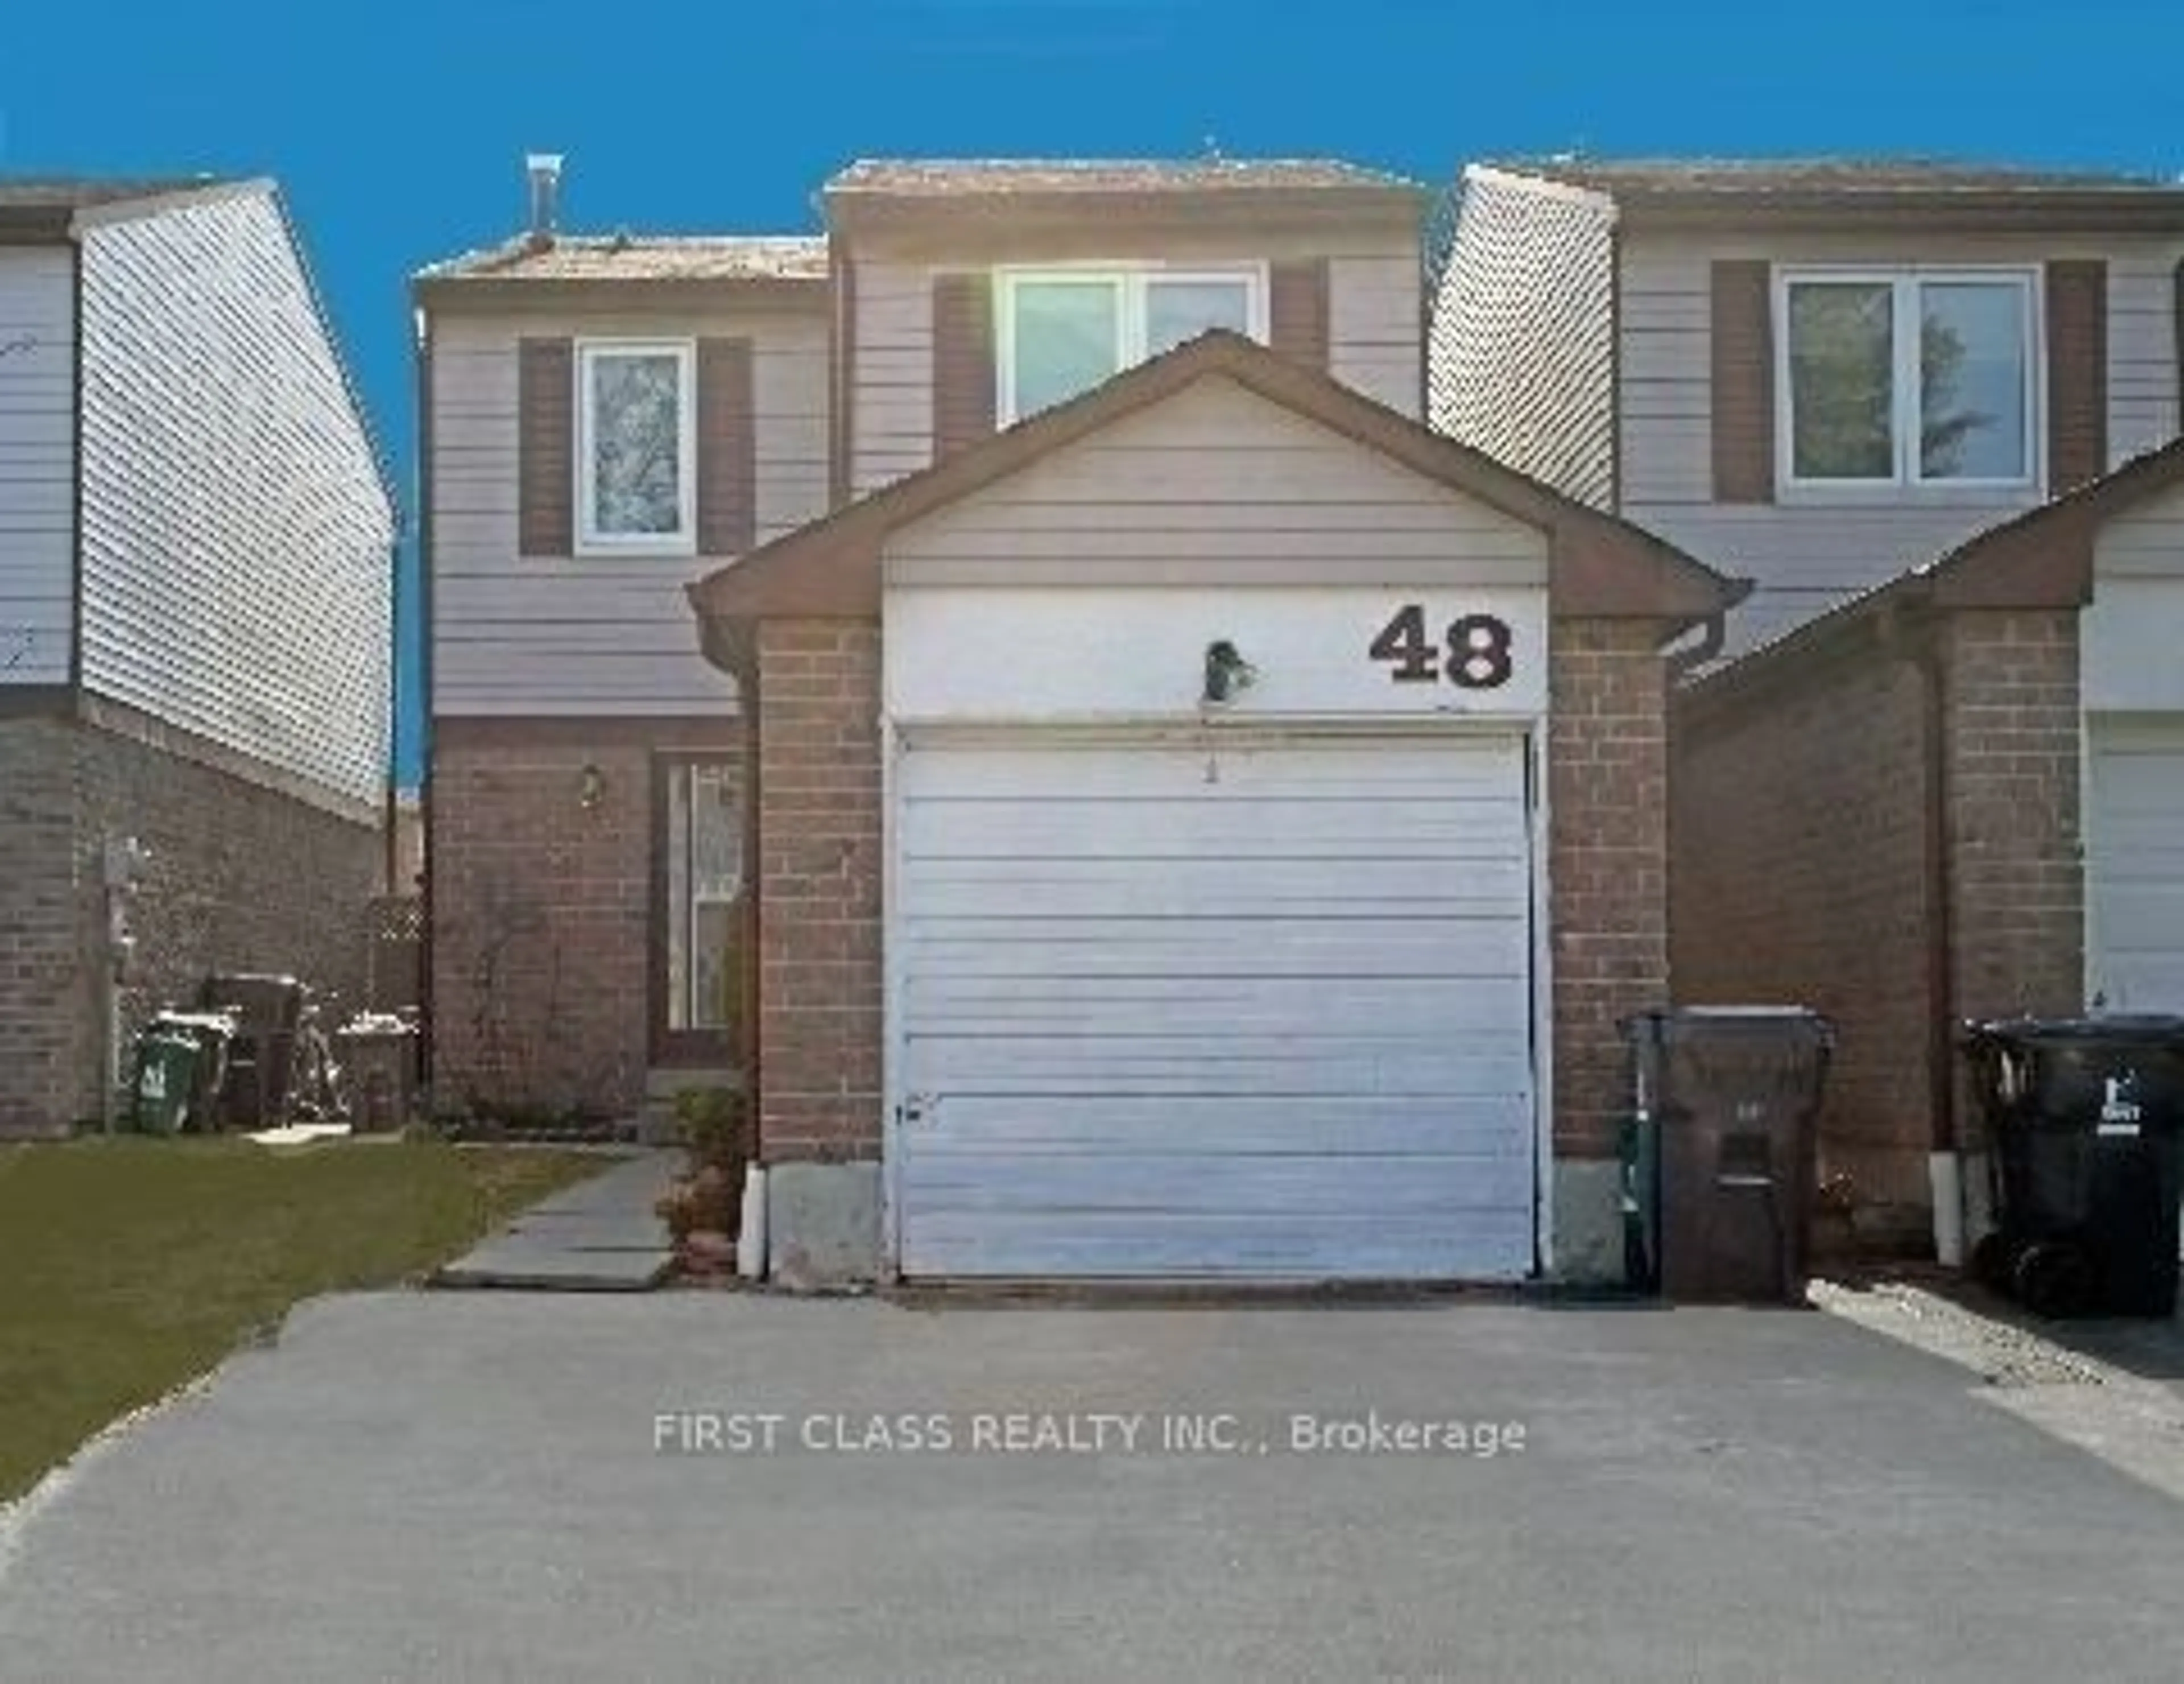 Frontside or backside of a home for 48 Green Spring Dr, Toronto Ontario M1V 2B1